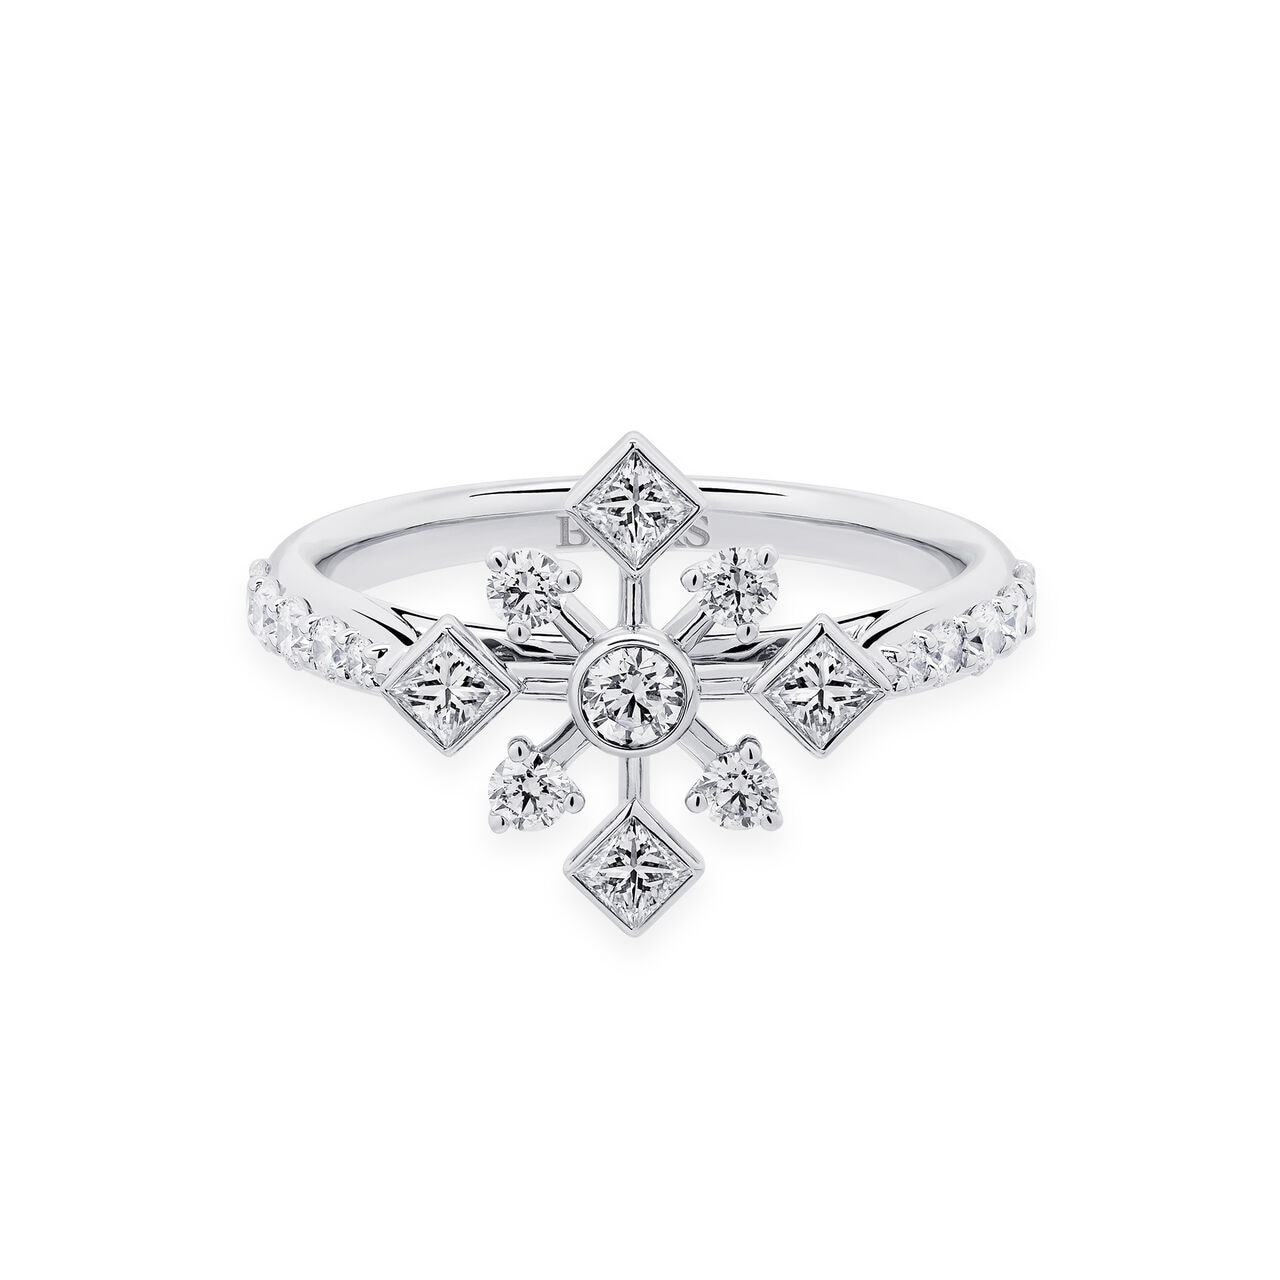 Birks Diamond engagement ring / .25 carat